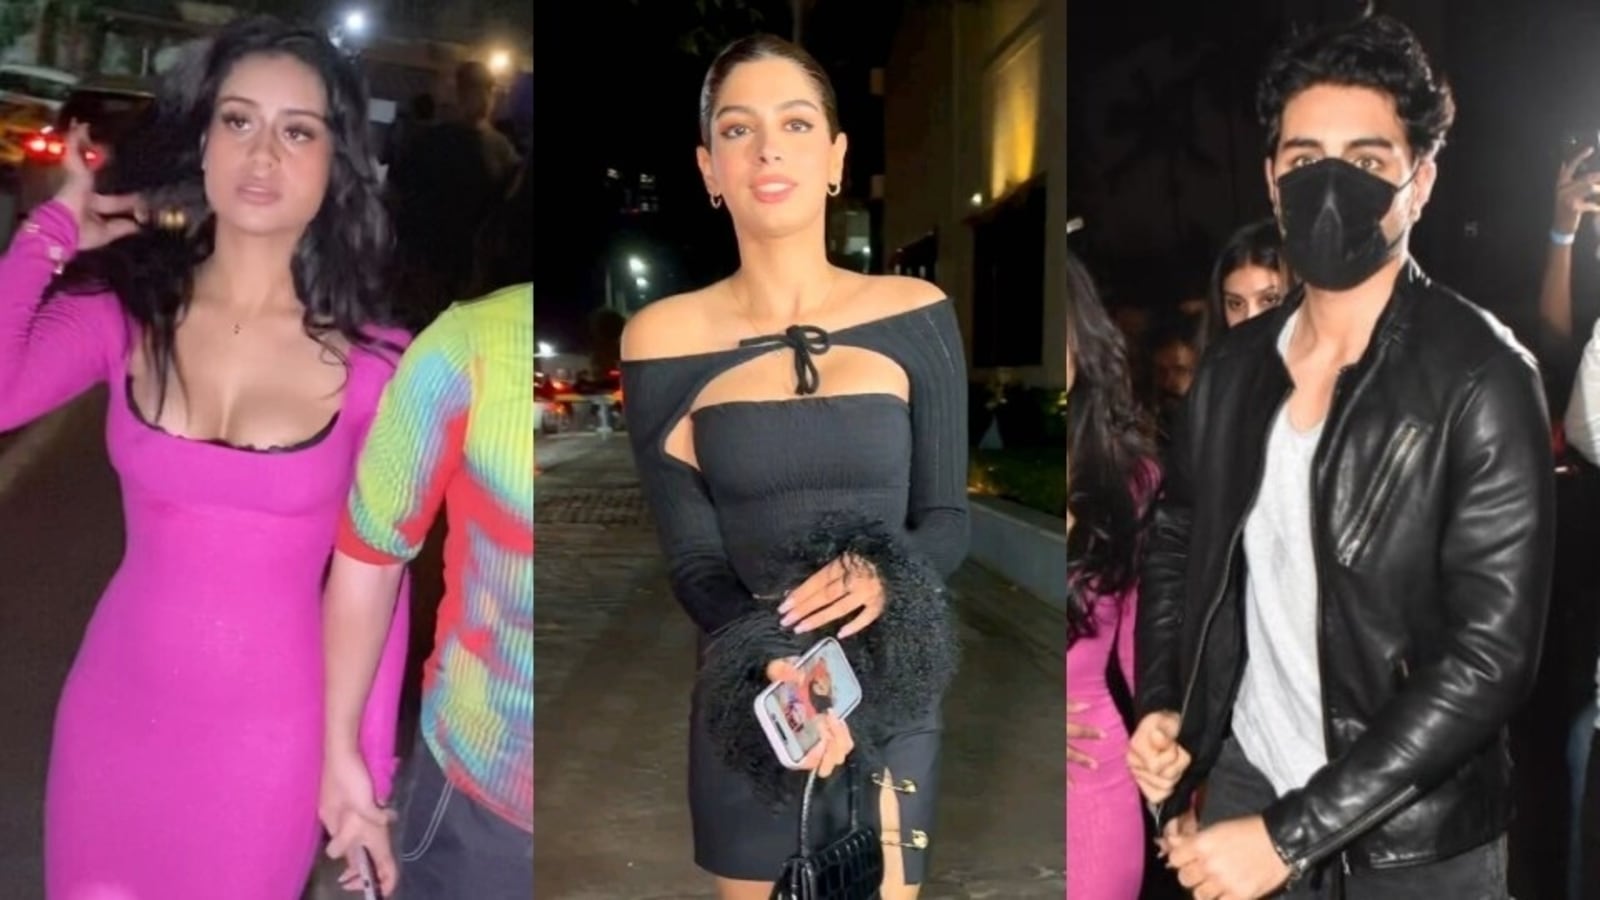 Sunil Pinki Xxx Videos - Nysa Devgan, Khushi Kapoor, Ibrahim Ali Khan attend Christmas bash in  glamorous outfits with friends. Watch videos | Fashion Trends - Hindustan  Times